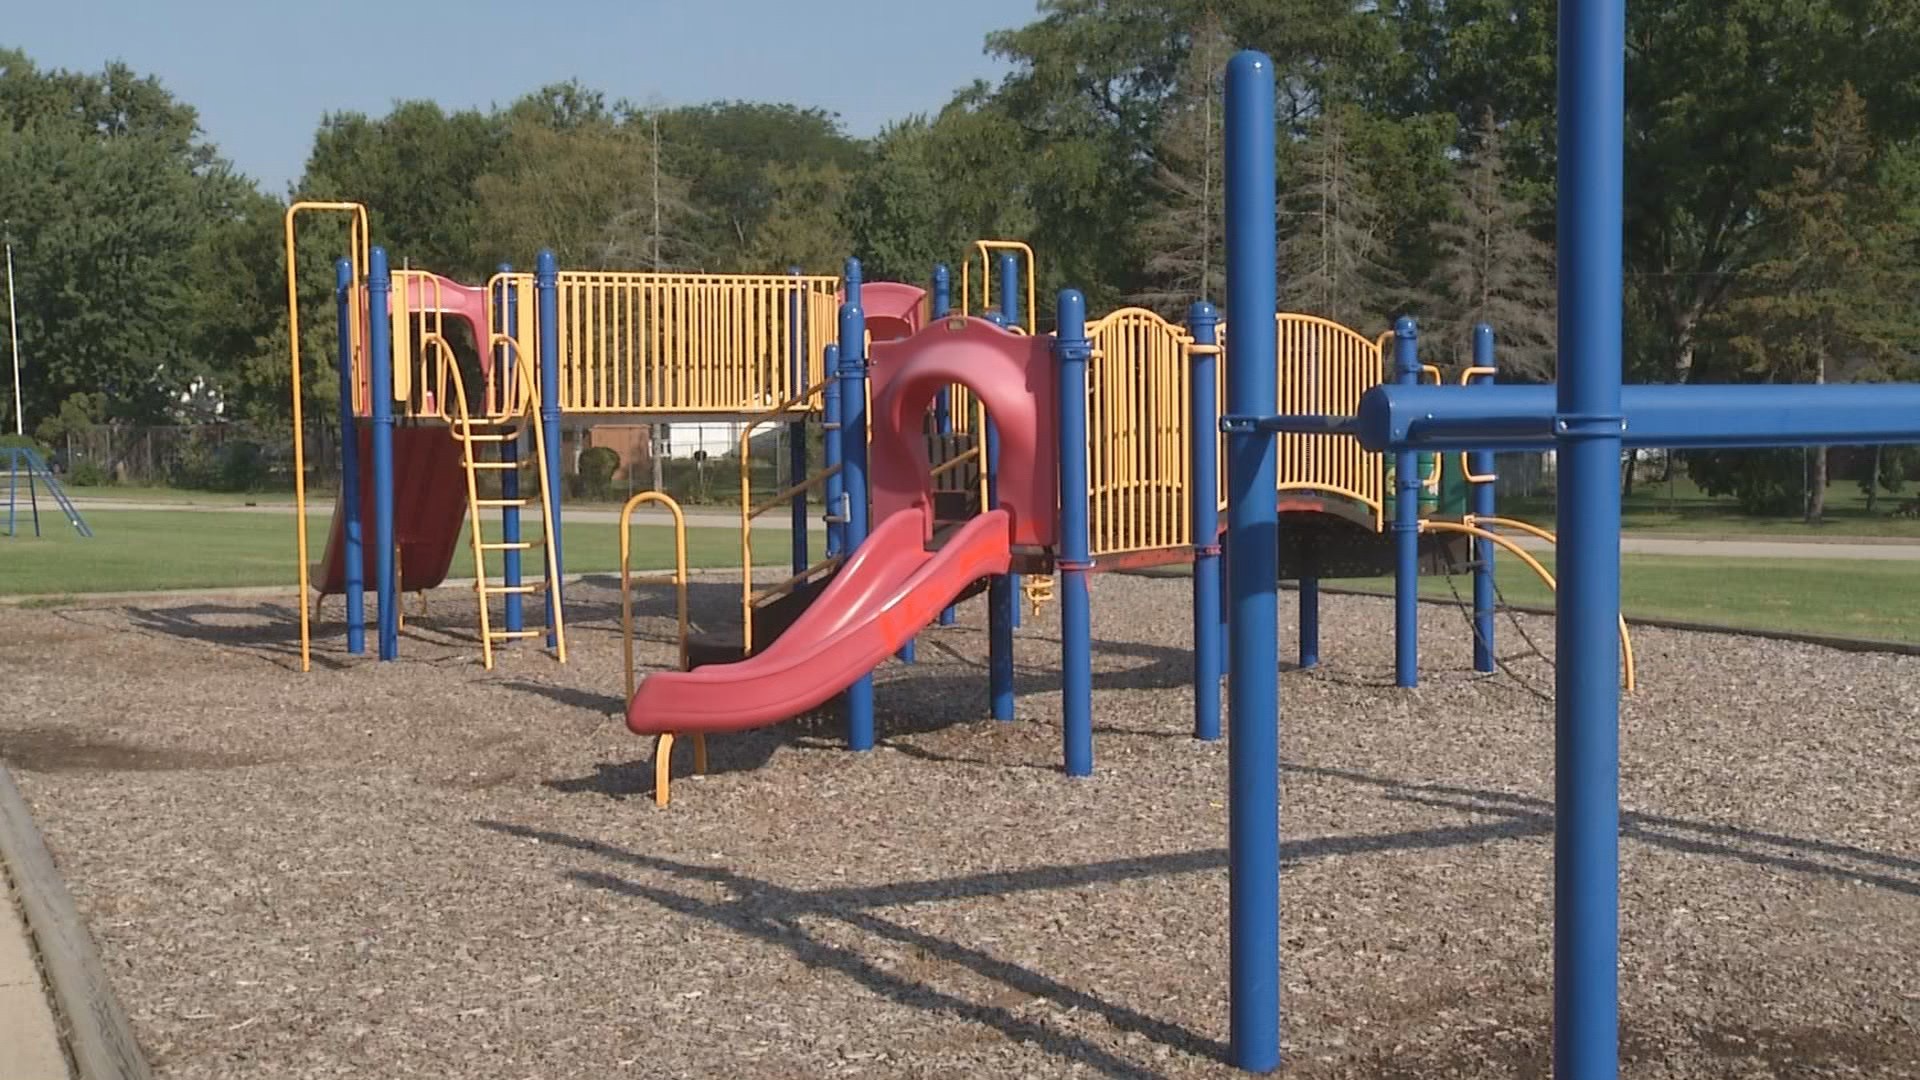 Saginaw elementary, playground becomes victim of vandalism - WNEM TV 51920 x 1080